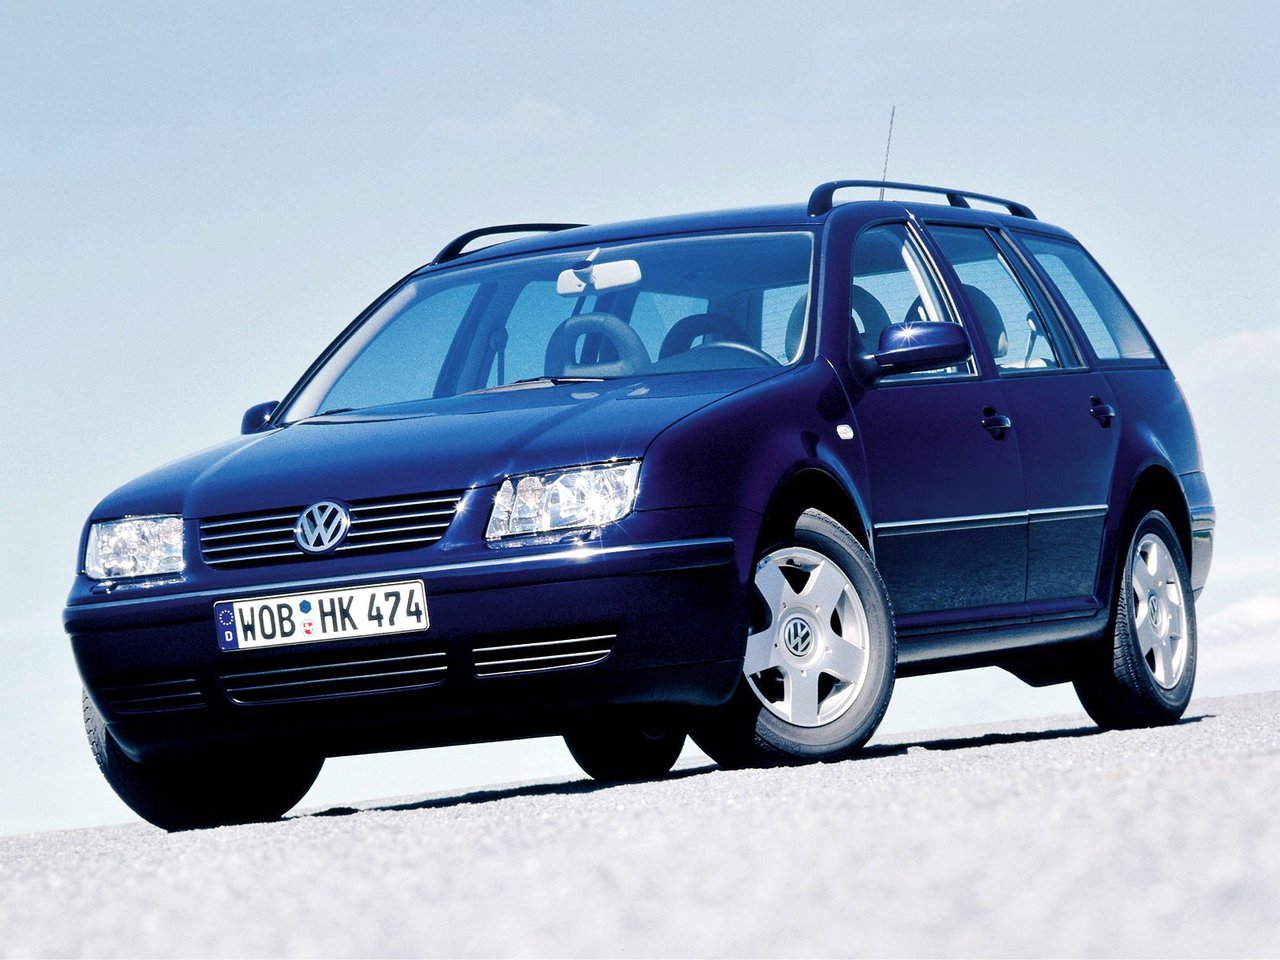 Снижаем расход Volkswagen Bora на топливо, устанавливаем ГБО